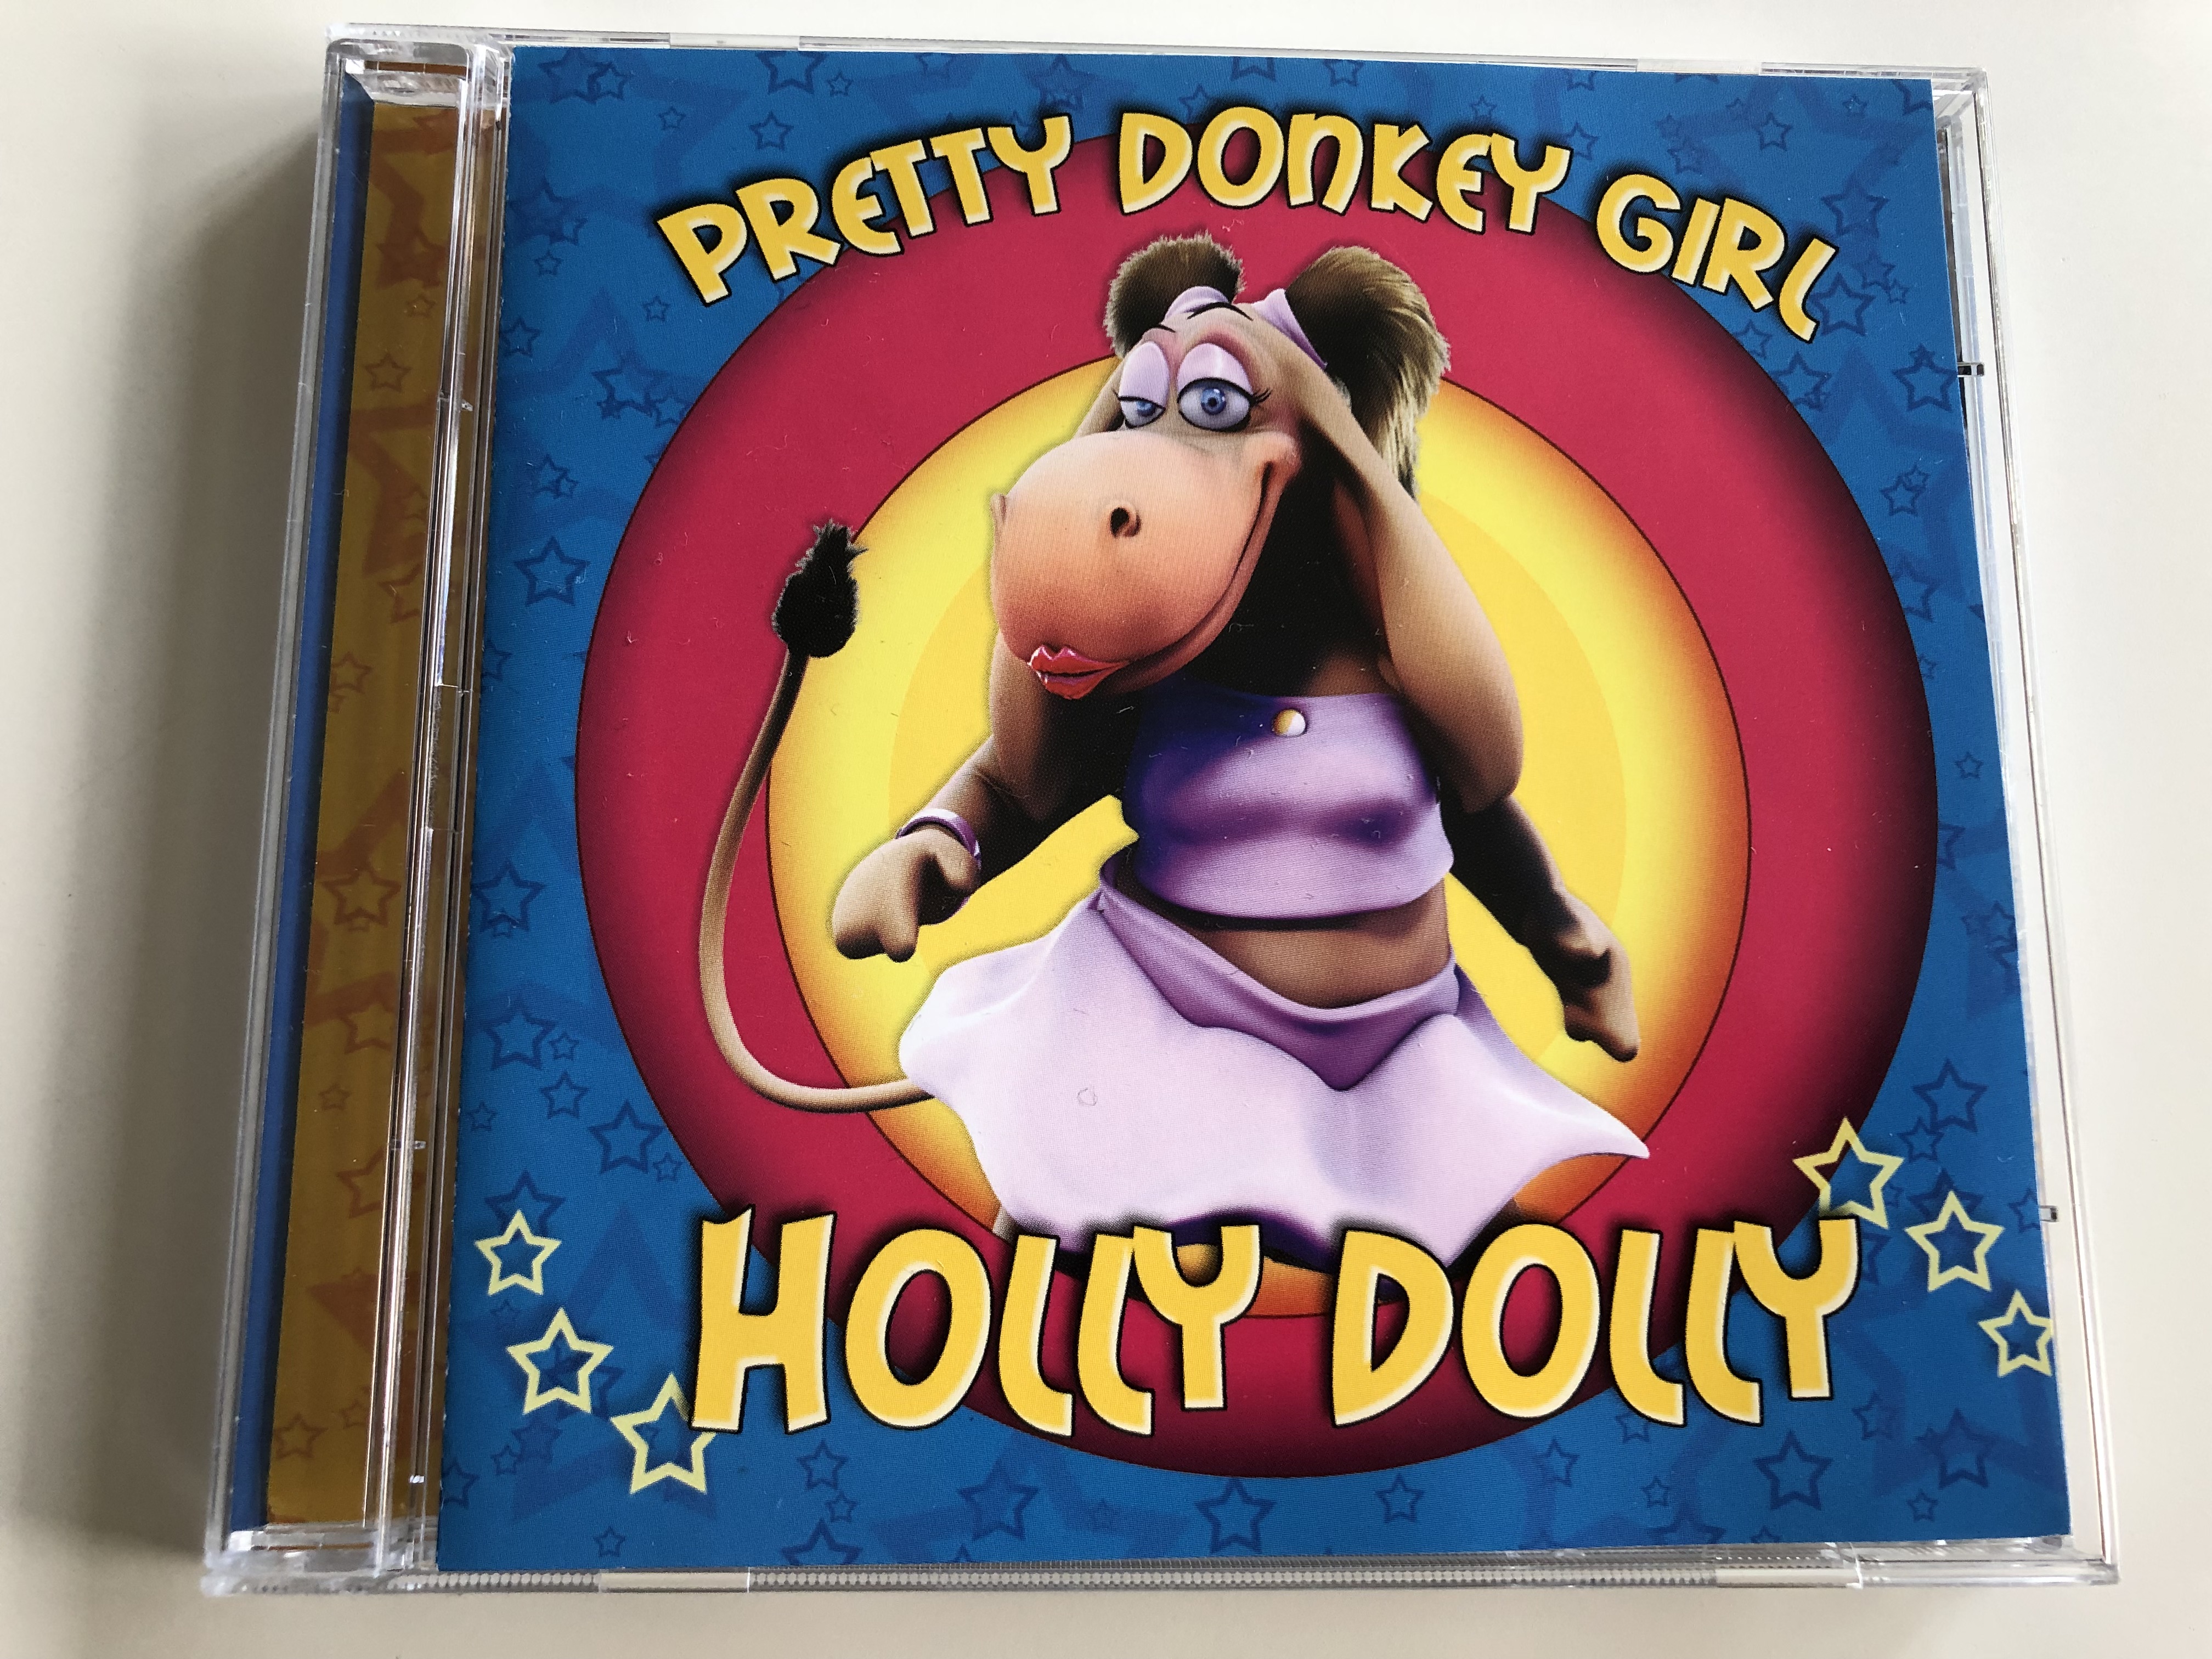 holly-dolly-pretty-donkey-girl-dolly-song-limbo-rock-without-control-holly-s-farm-mister-joe-jingle-bell-rock-audio-cd-2006-0178182kon-1-.jpg